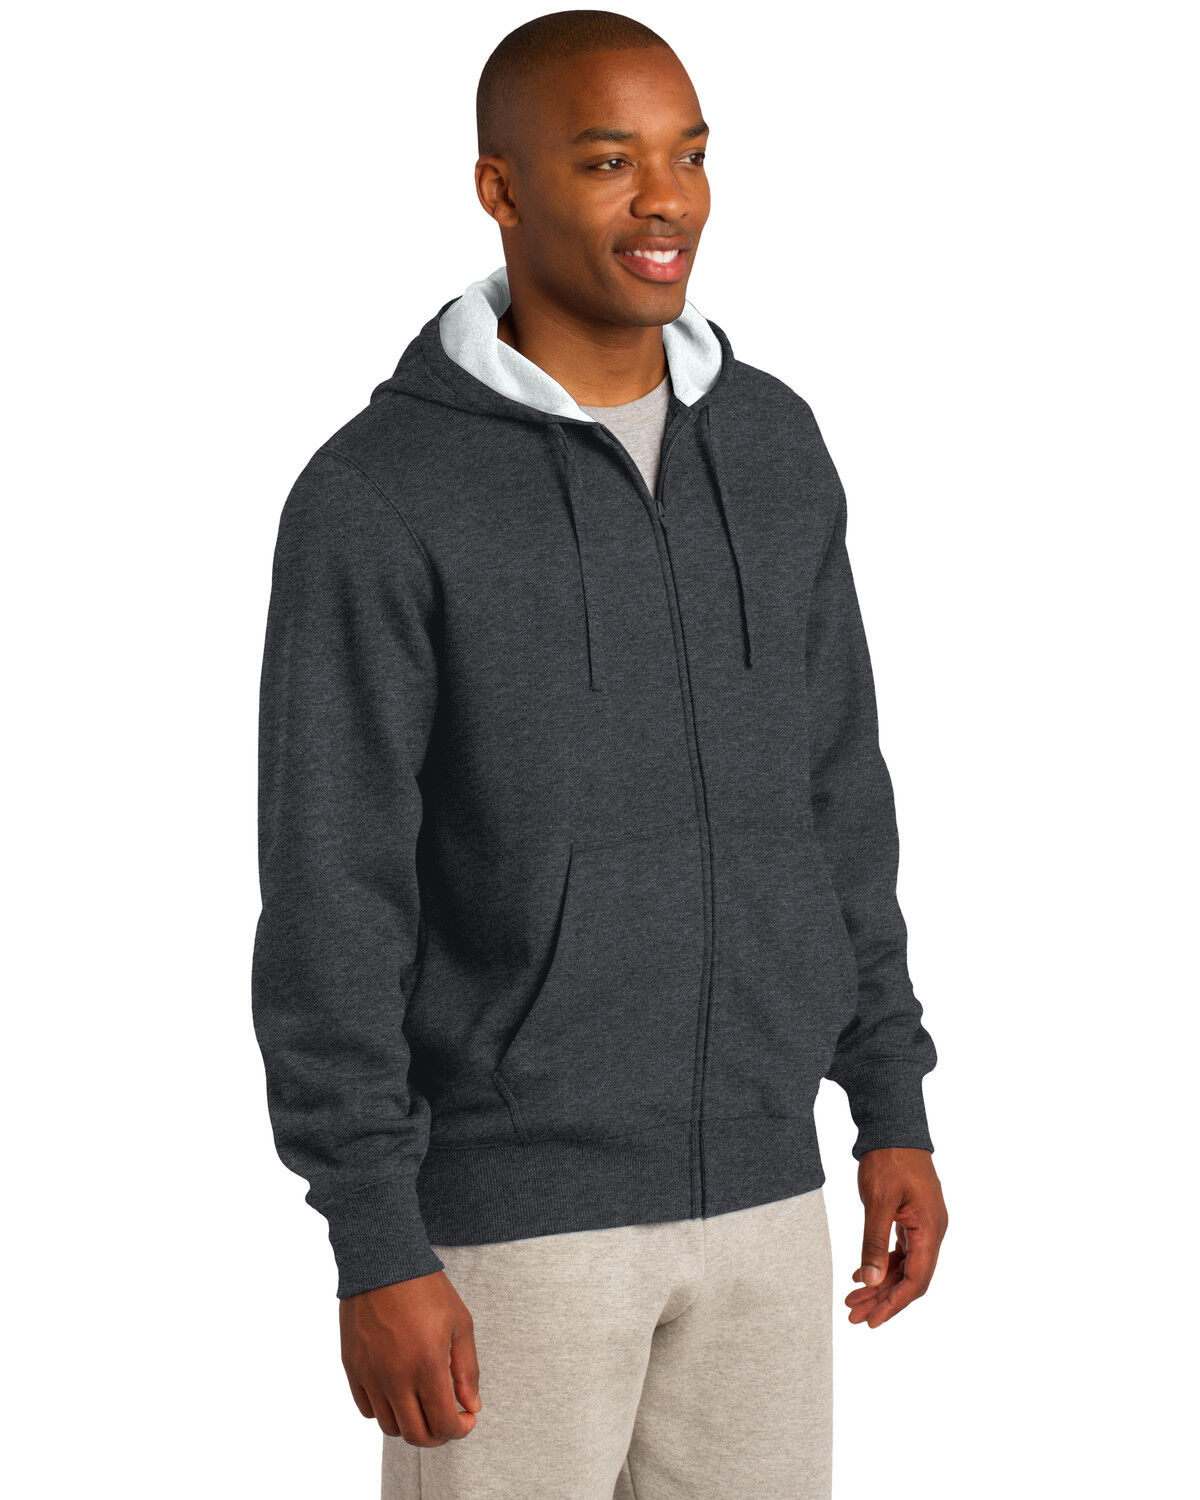 Sport-Tek Men's Full Zip Sweatshirt,X-Large,Graphite Hthr